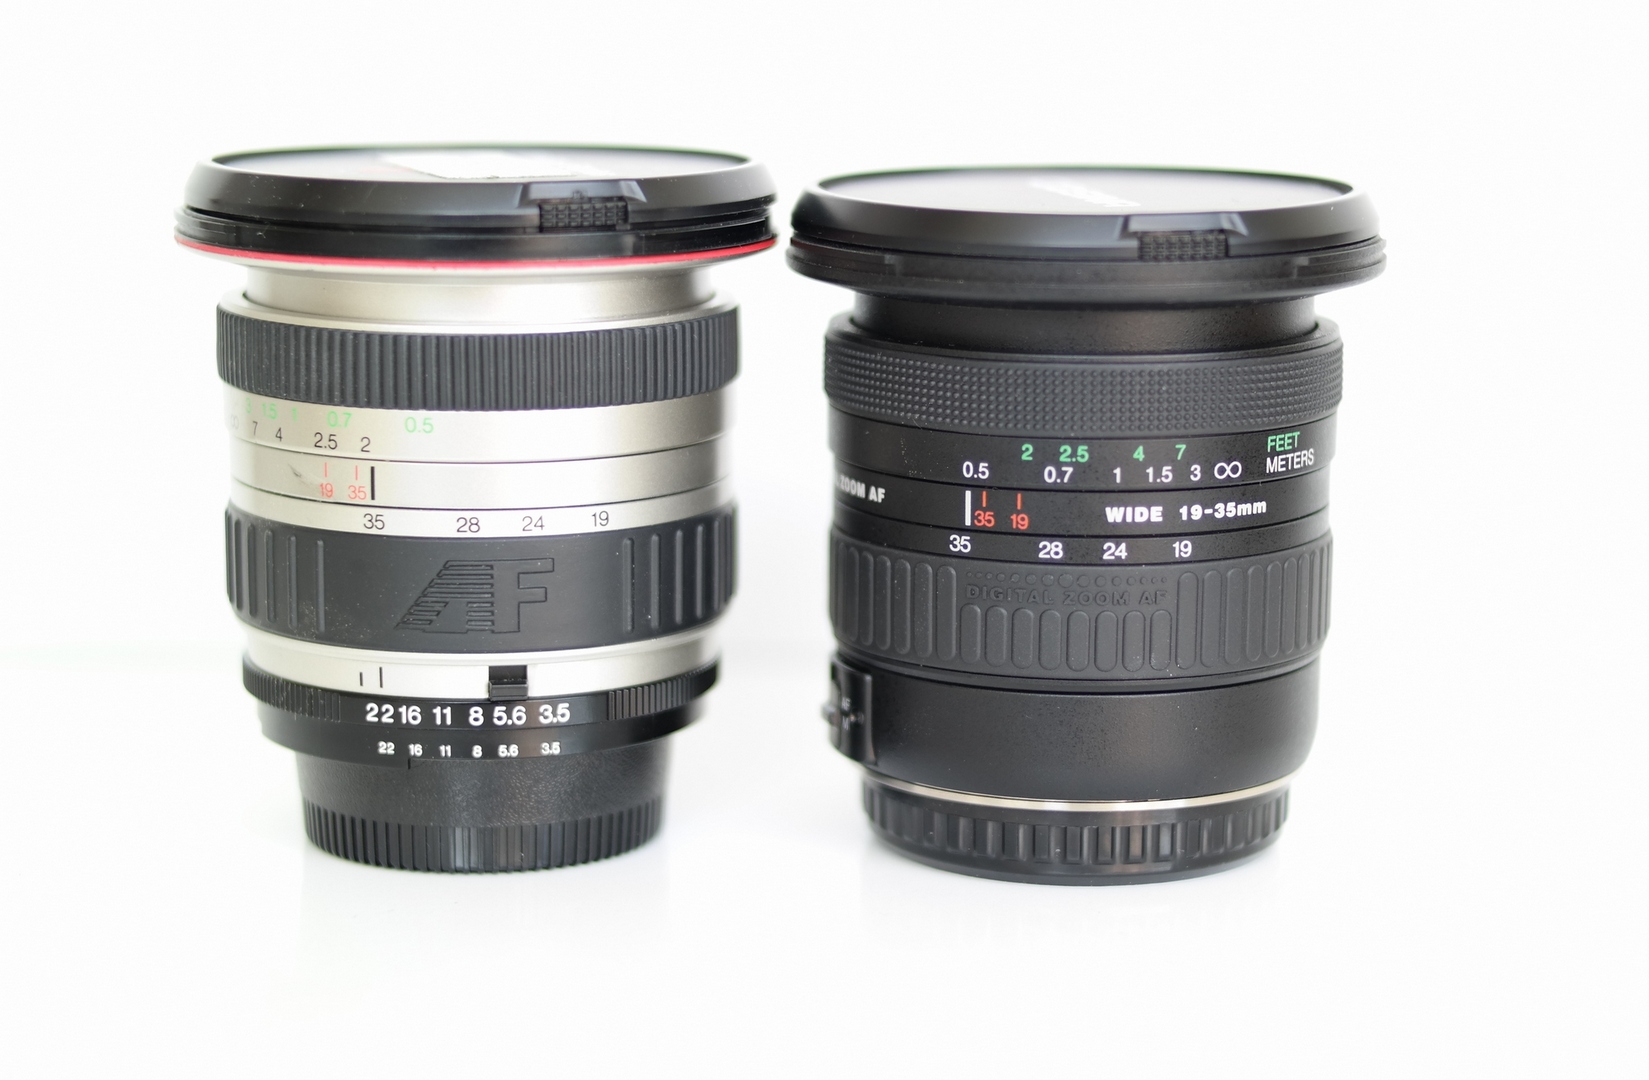 Vivitar-Cosina 19-35mm f3.5-4.5 Wide Angle Lens User Review